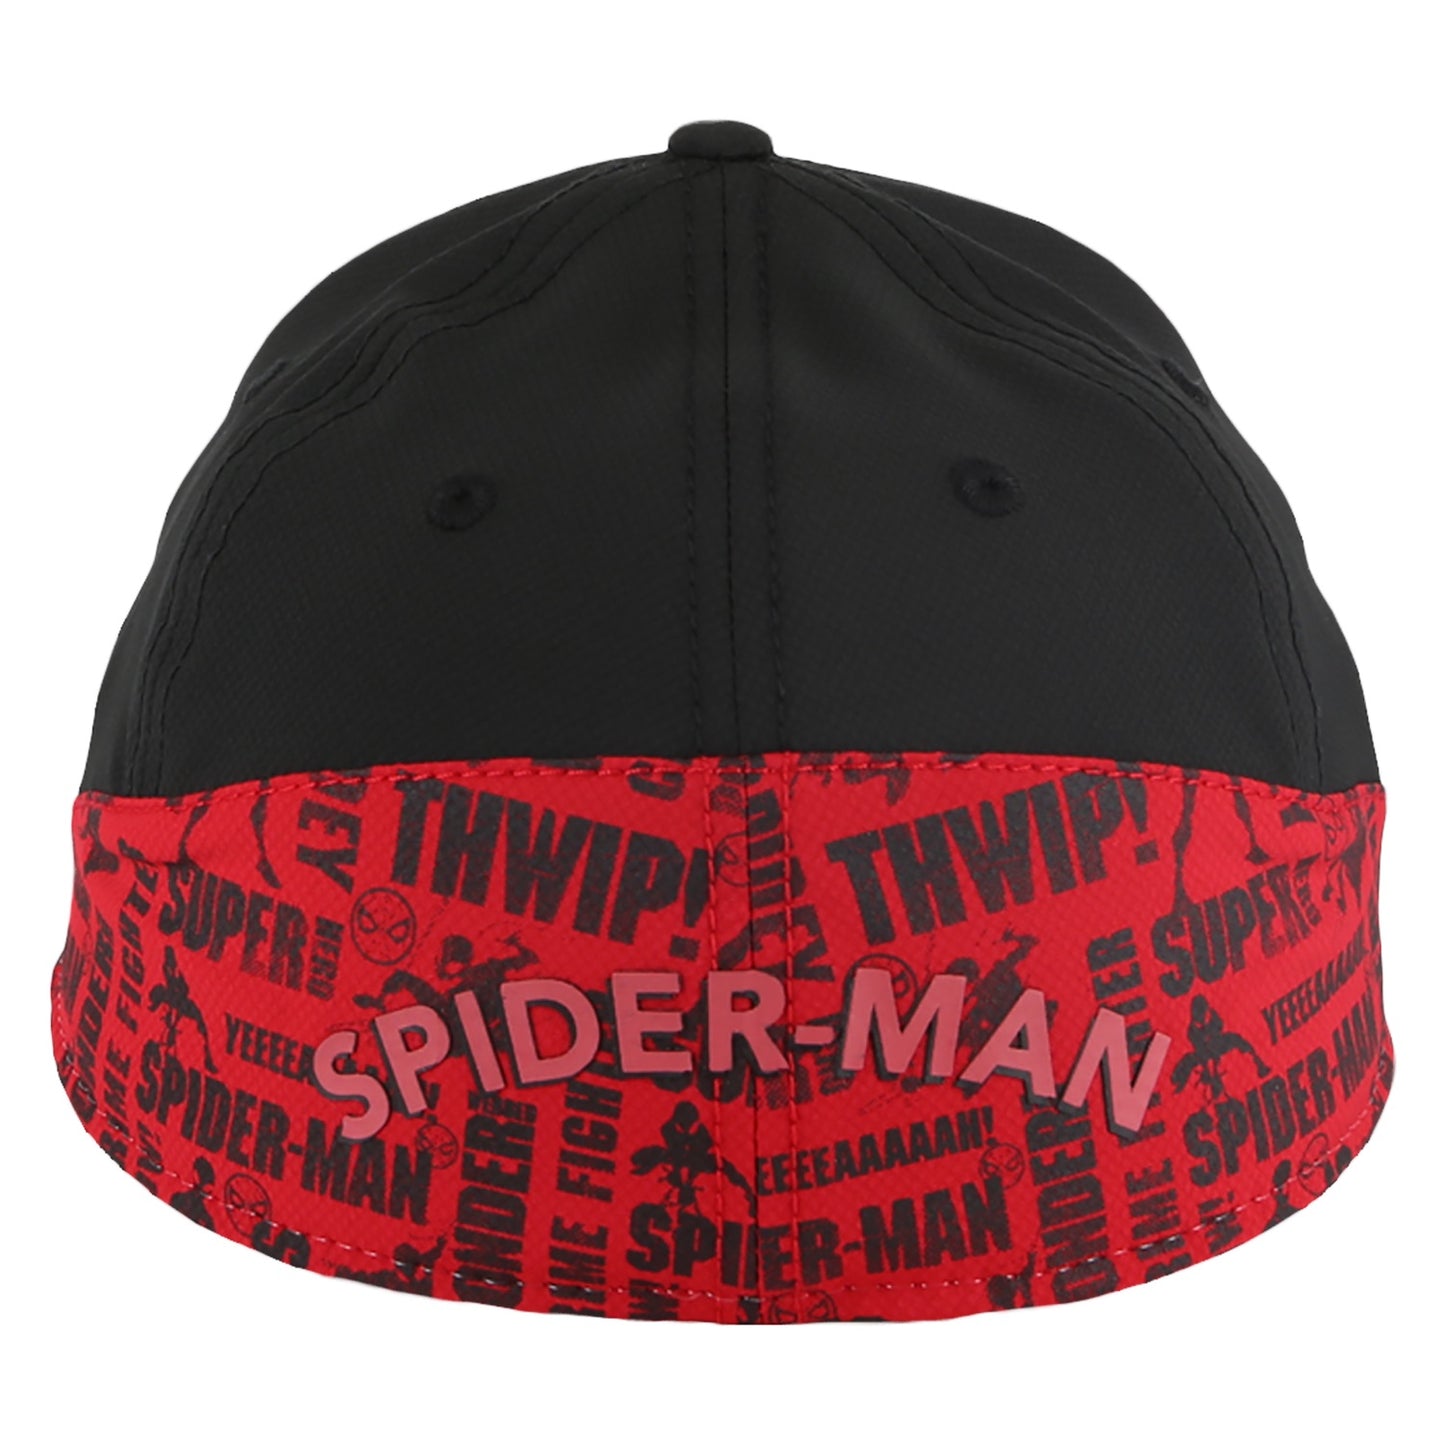 Spider-Man Baseball Cap in Black